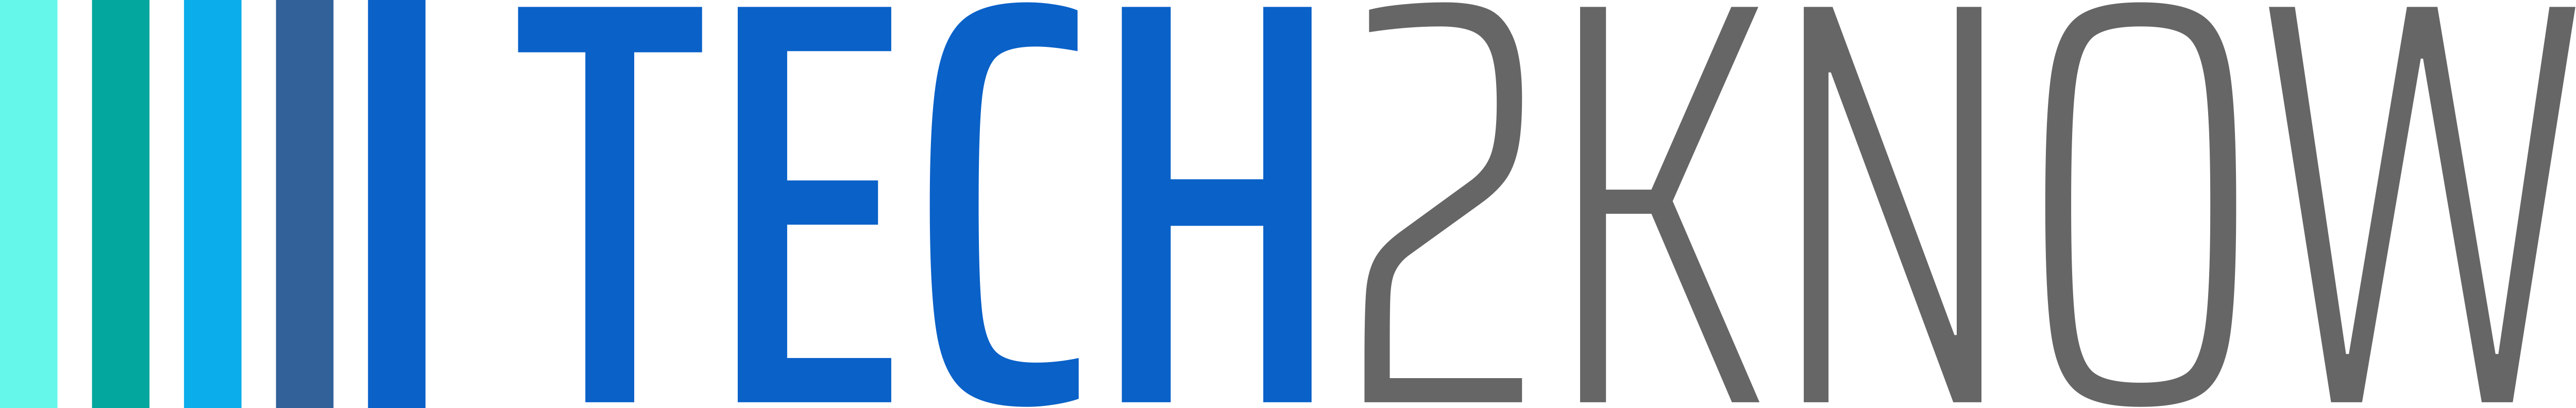 Thornagel GmbH_logo